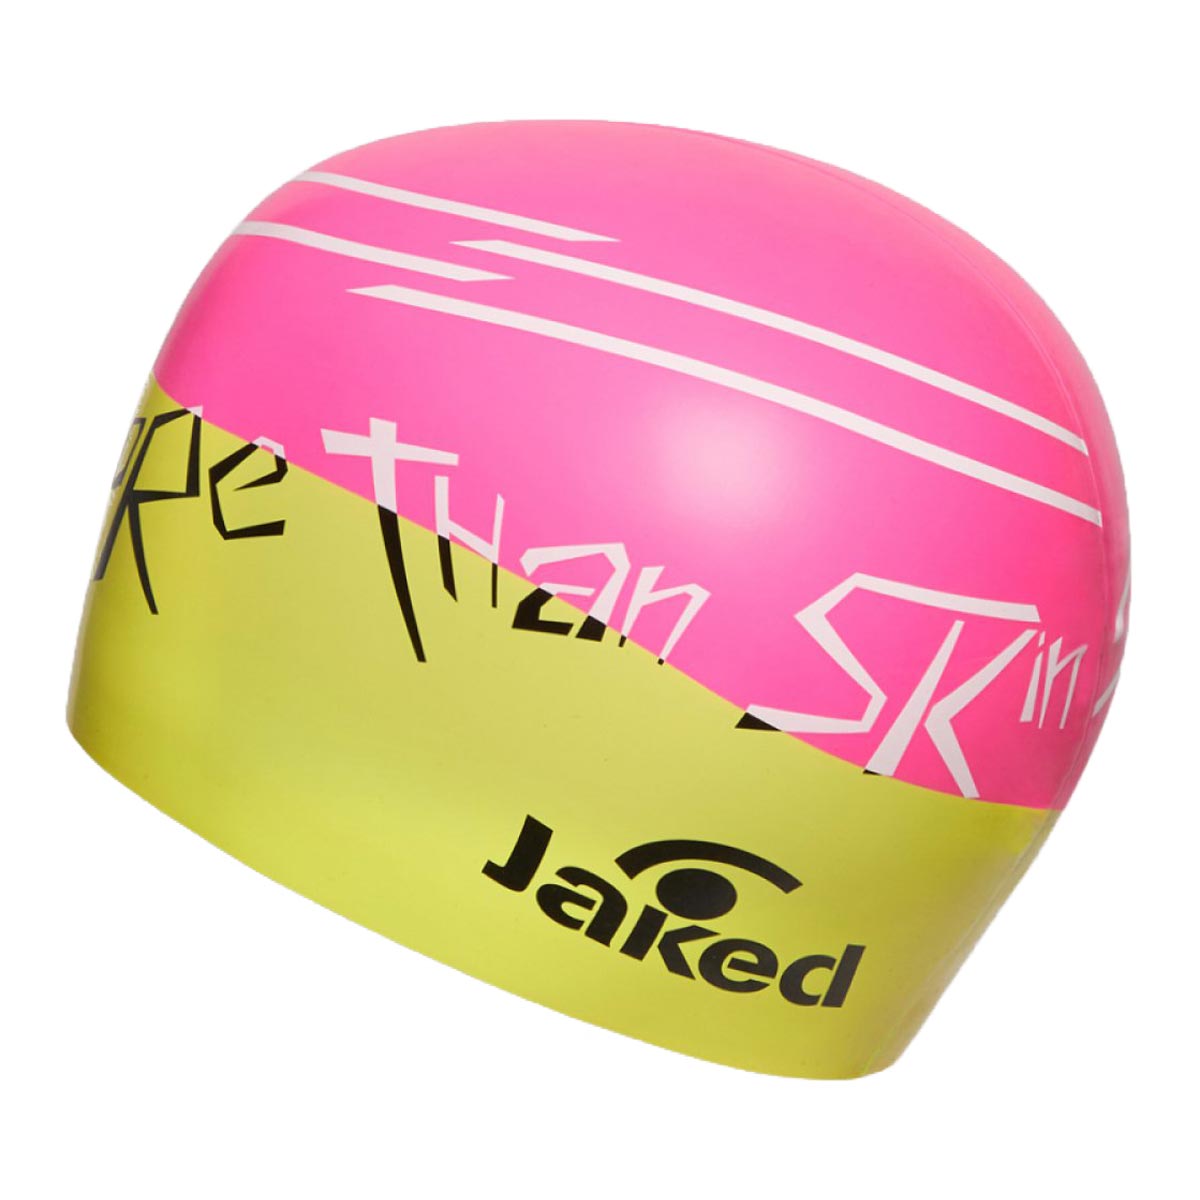 Jaked Digit Swim Cap - Pink